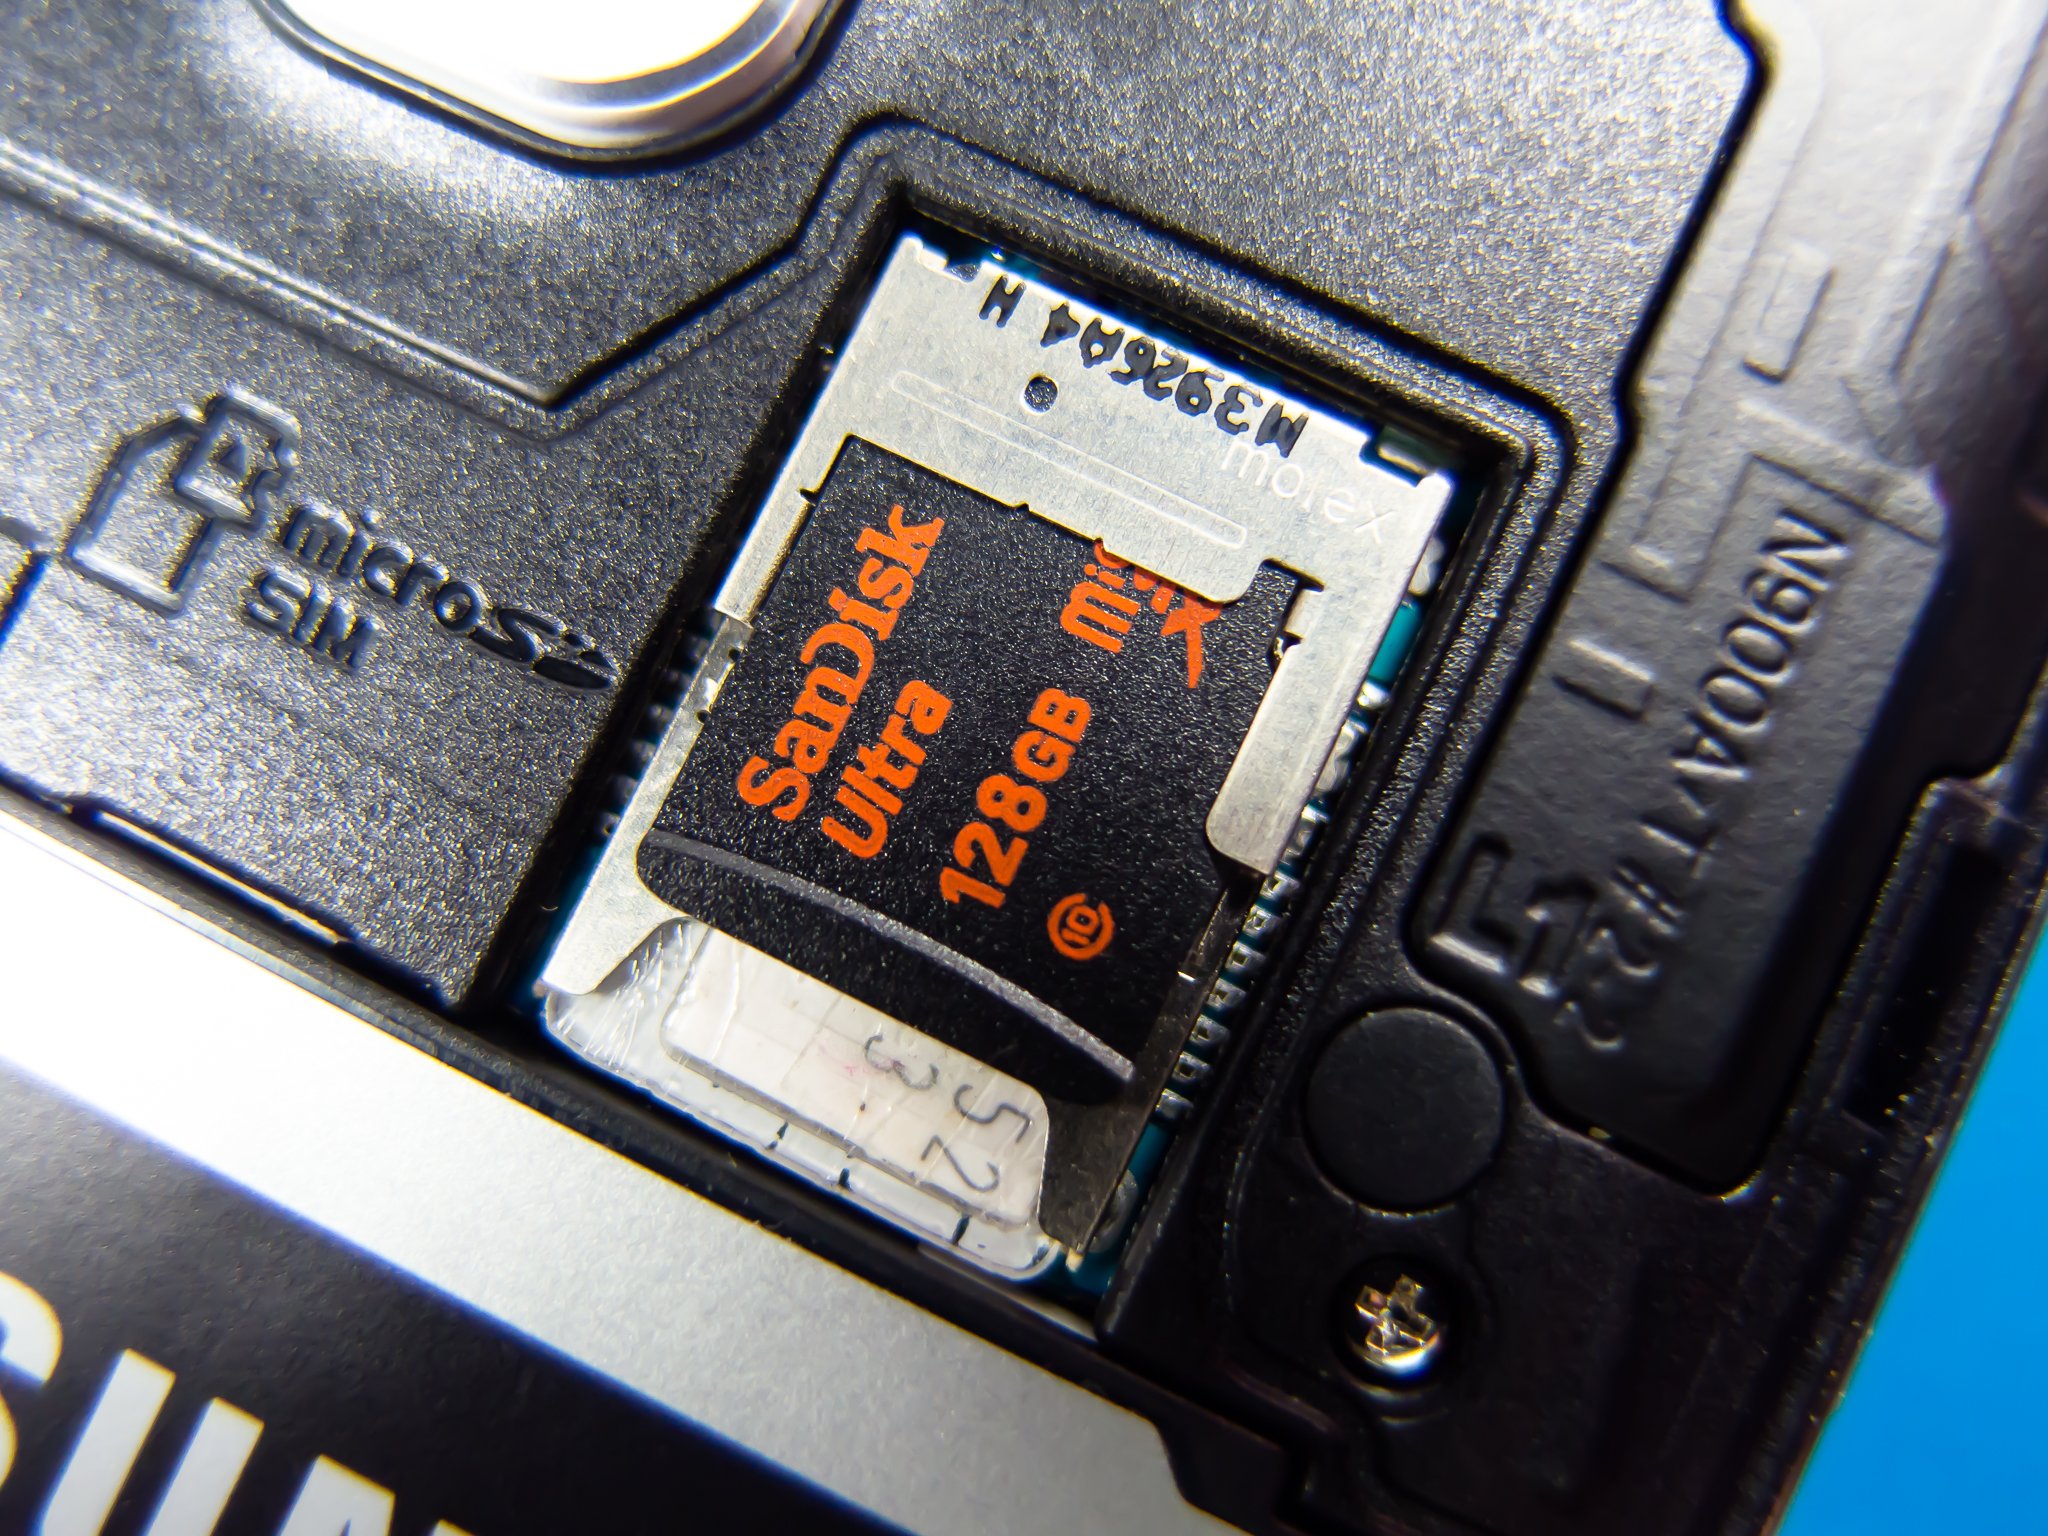 SD card